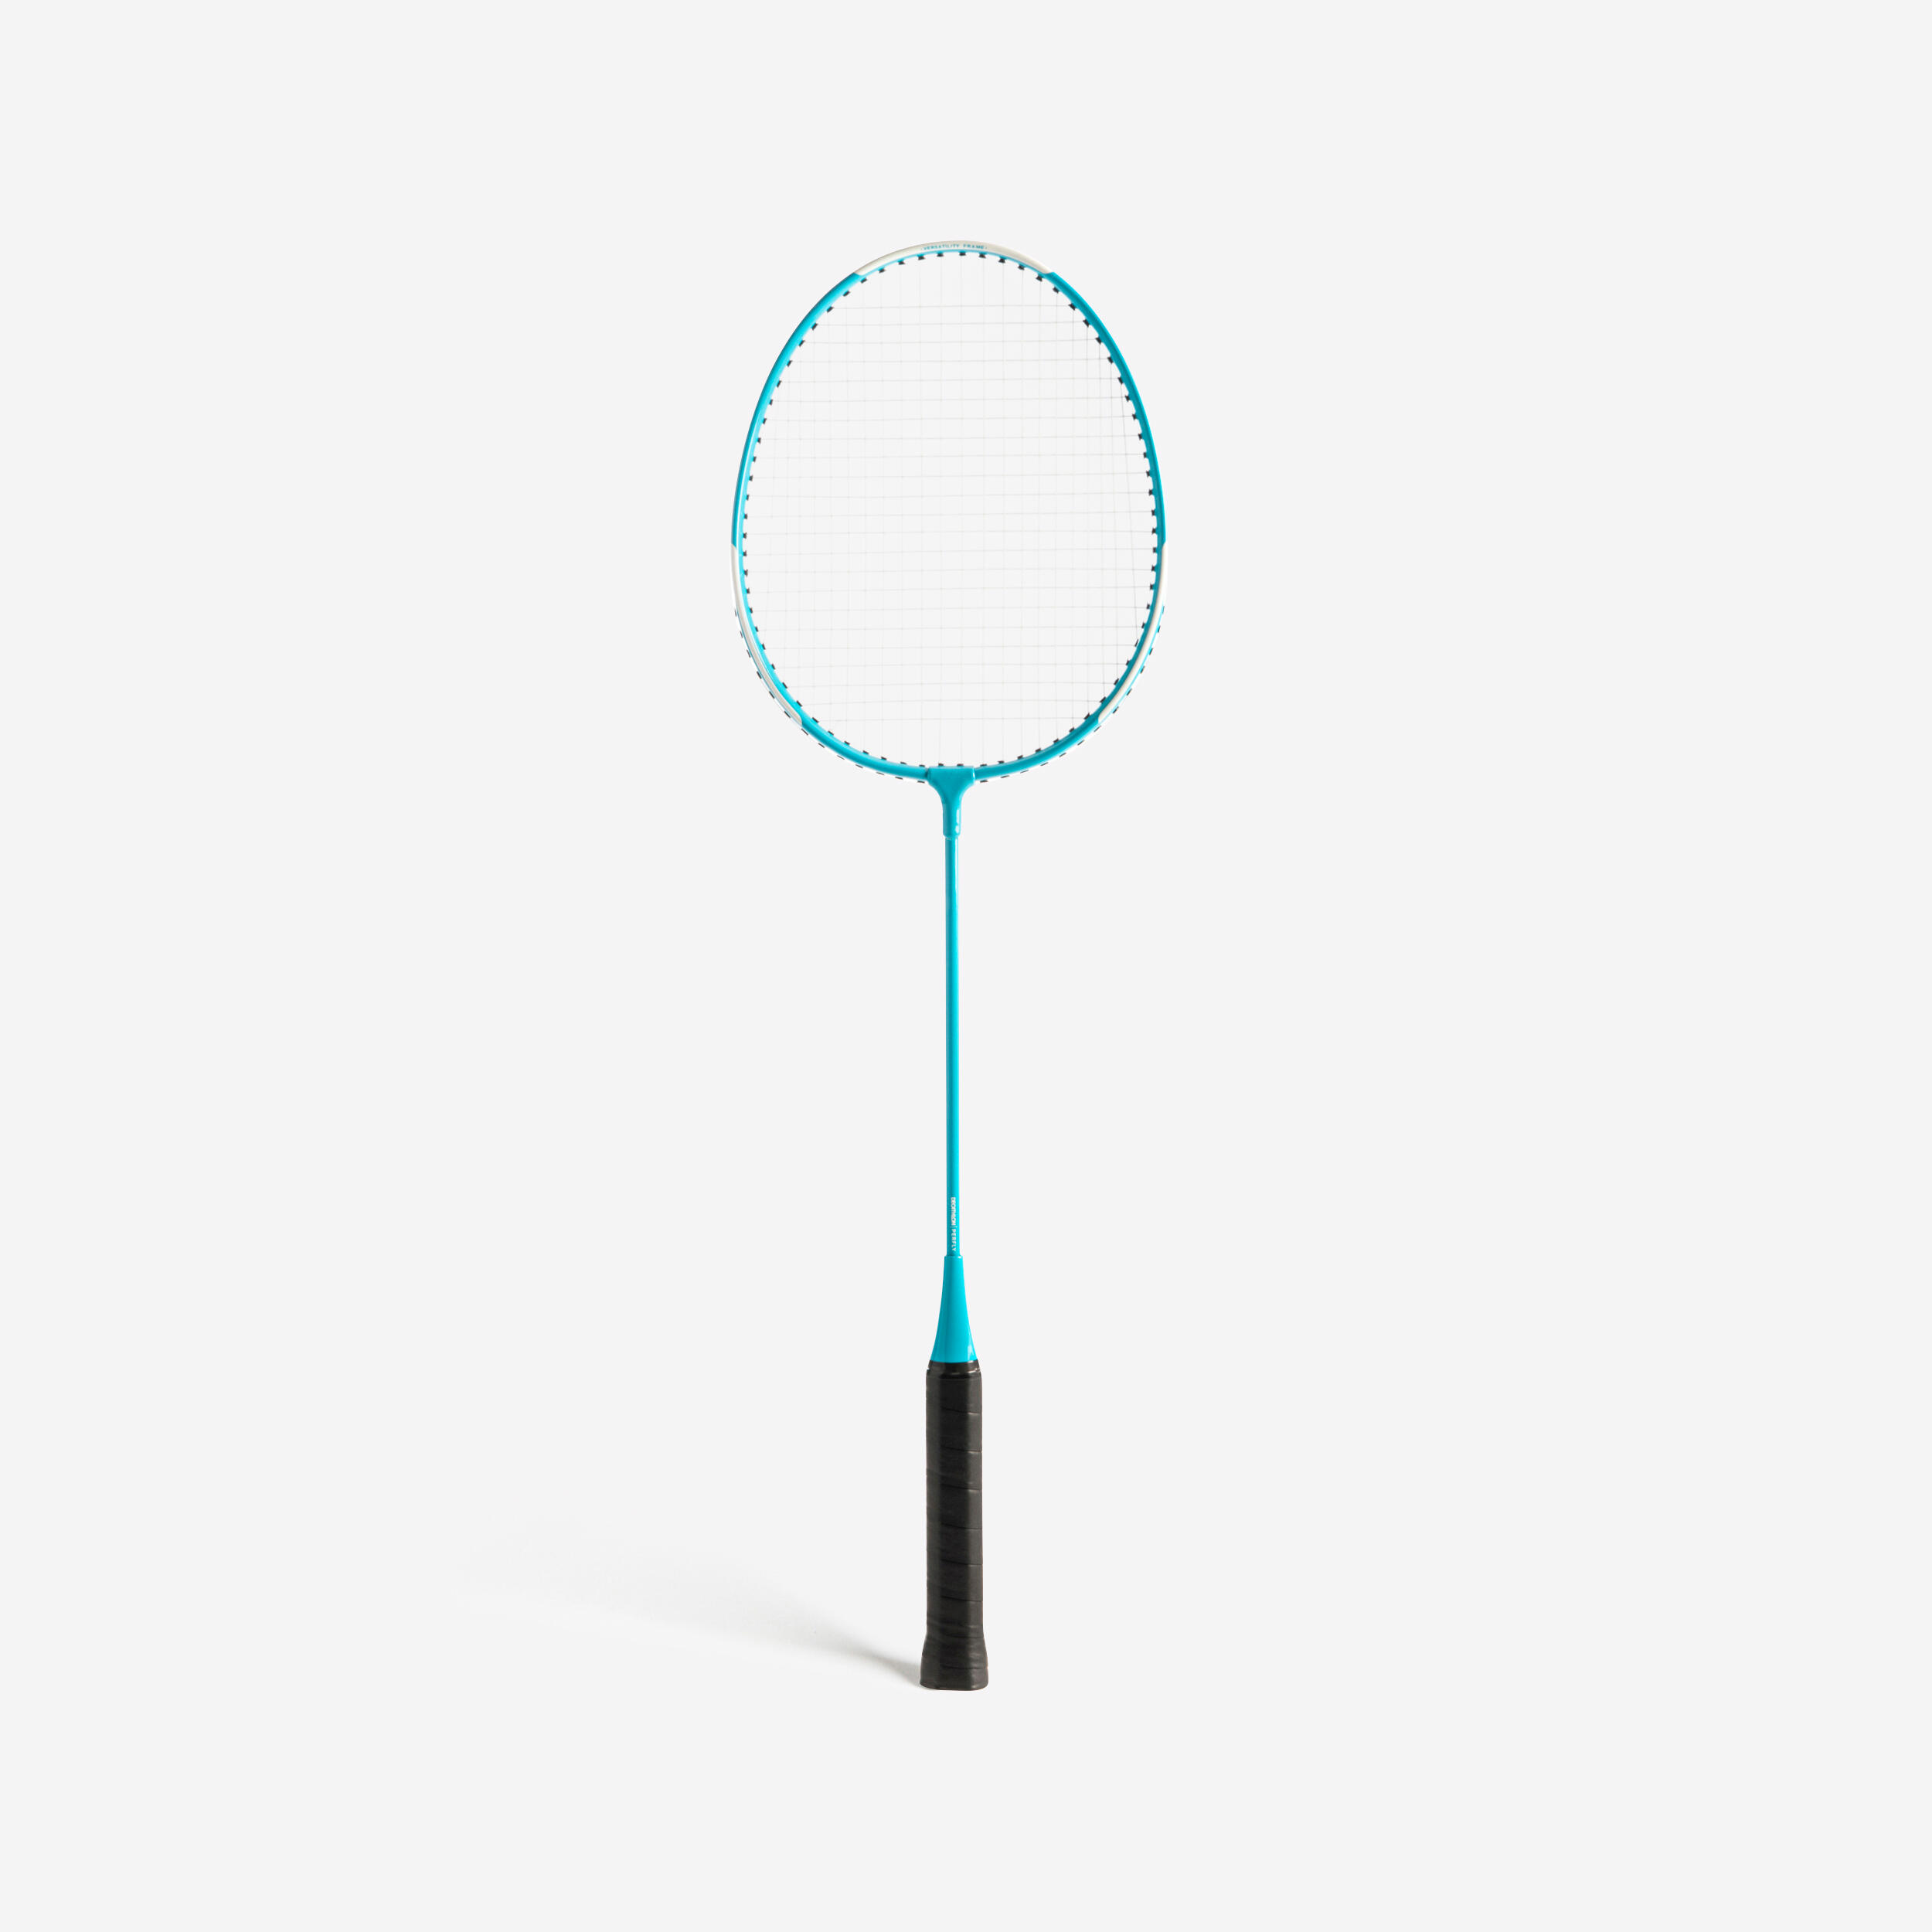 Rachetă Badminton în exterior BR100